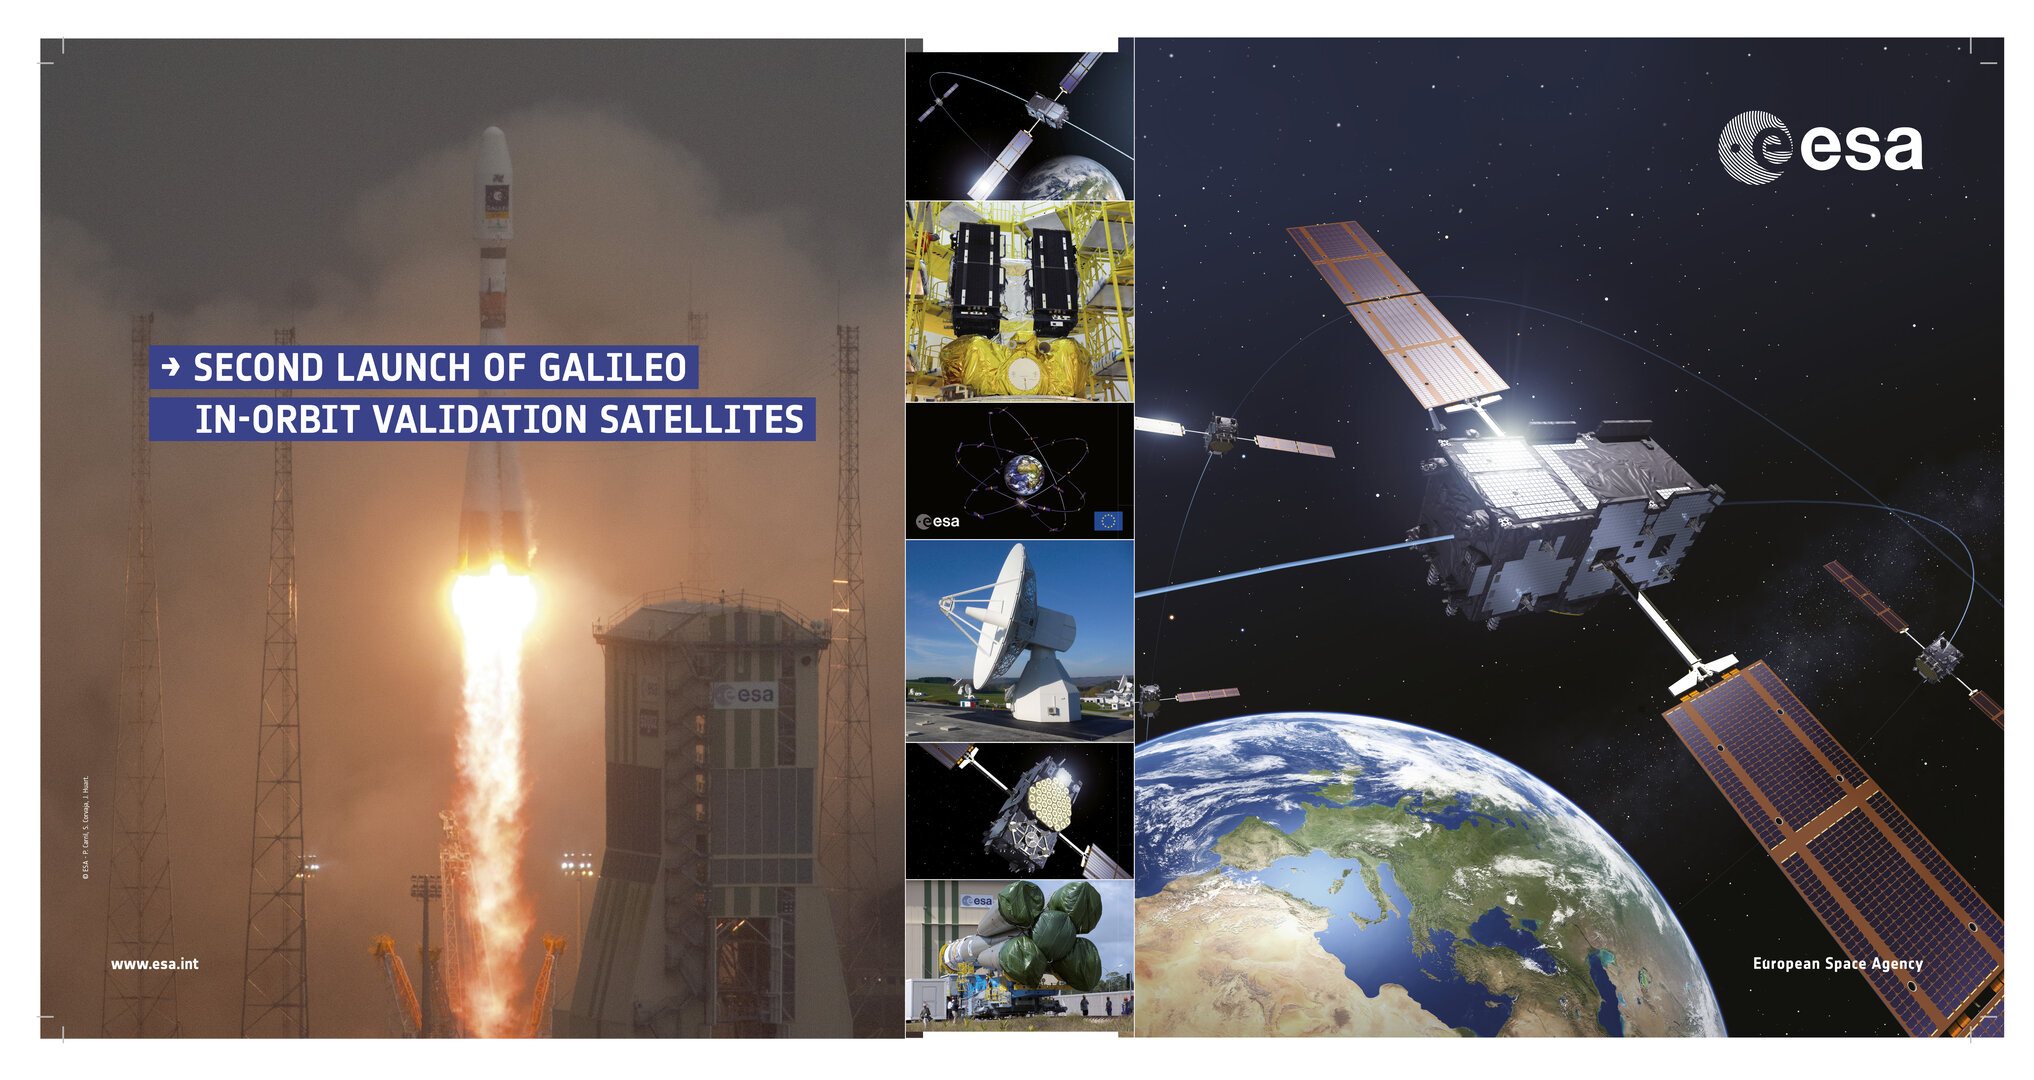 SECOND LAUNCH OF GALILEO IN-ORBIT VALIDATION SATELLITES